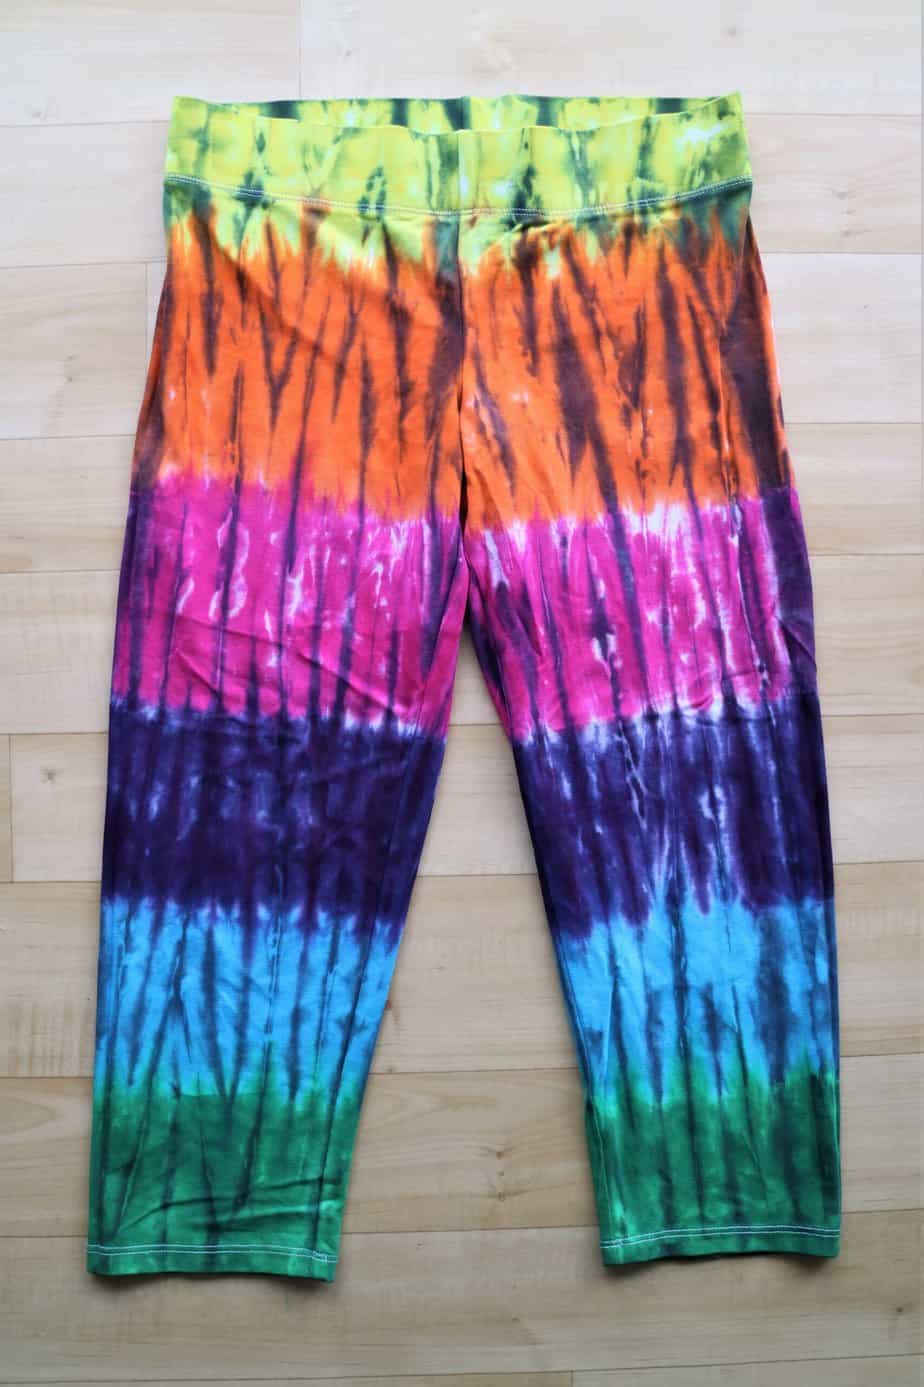 Rainbow tie-dyed leggings